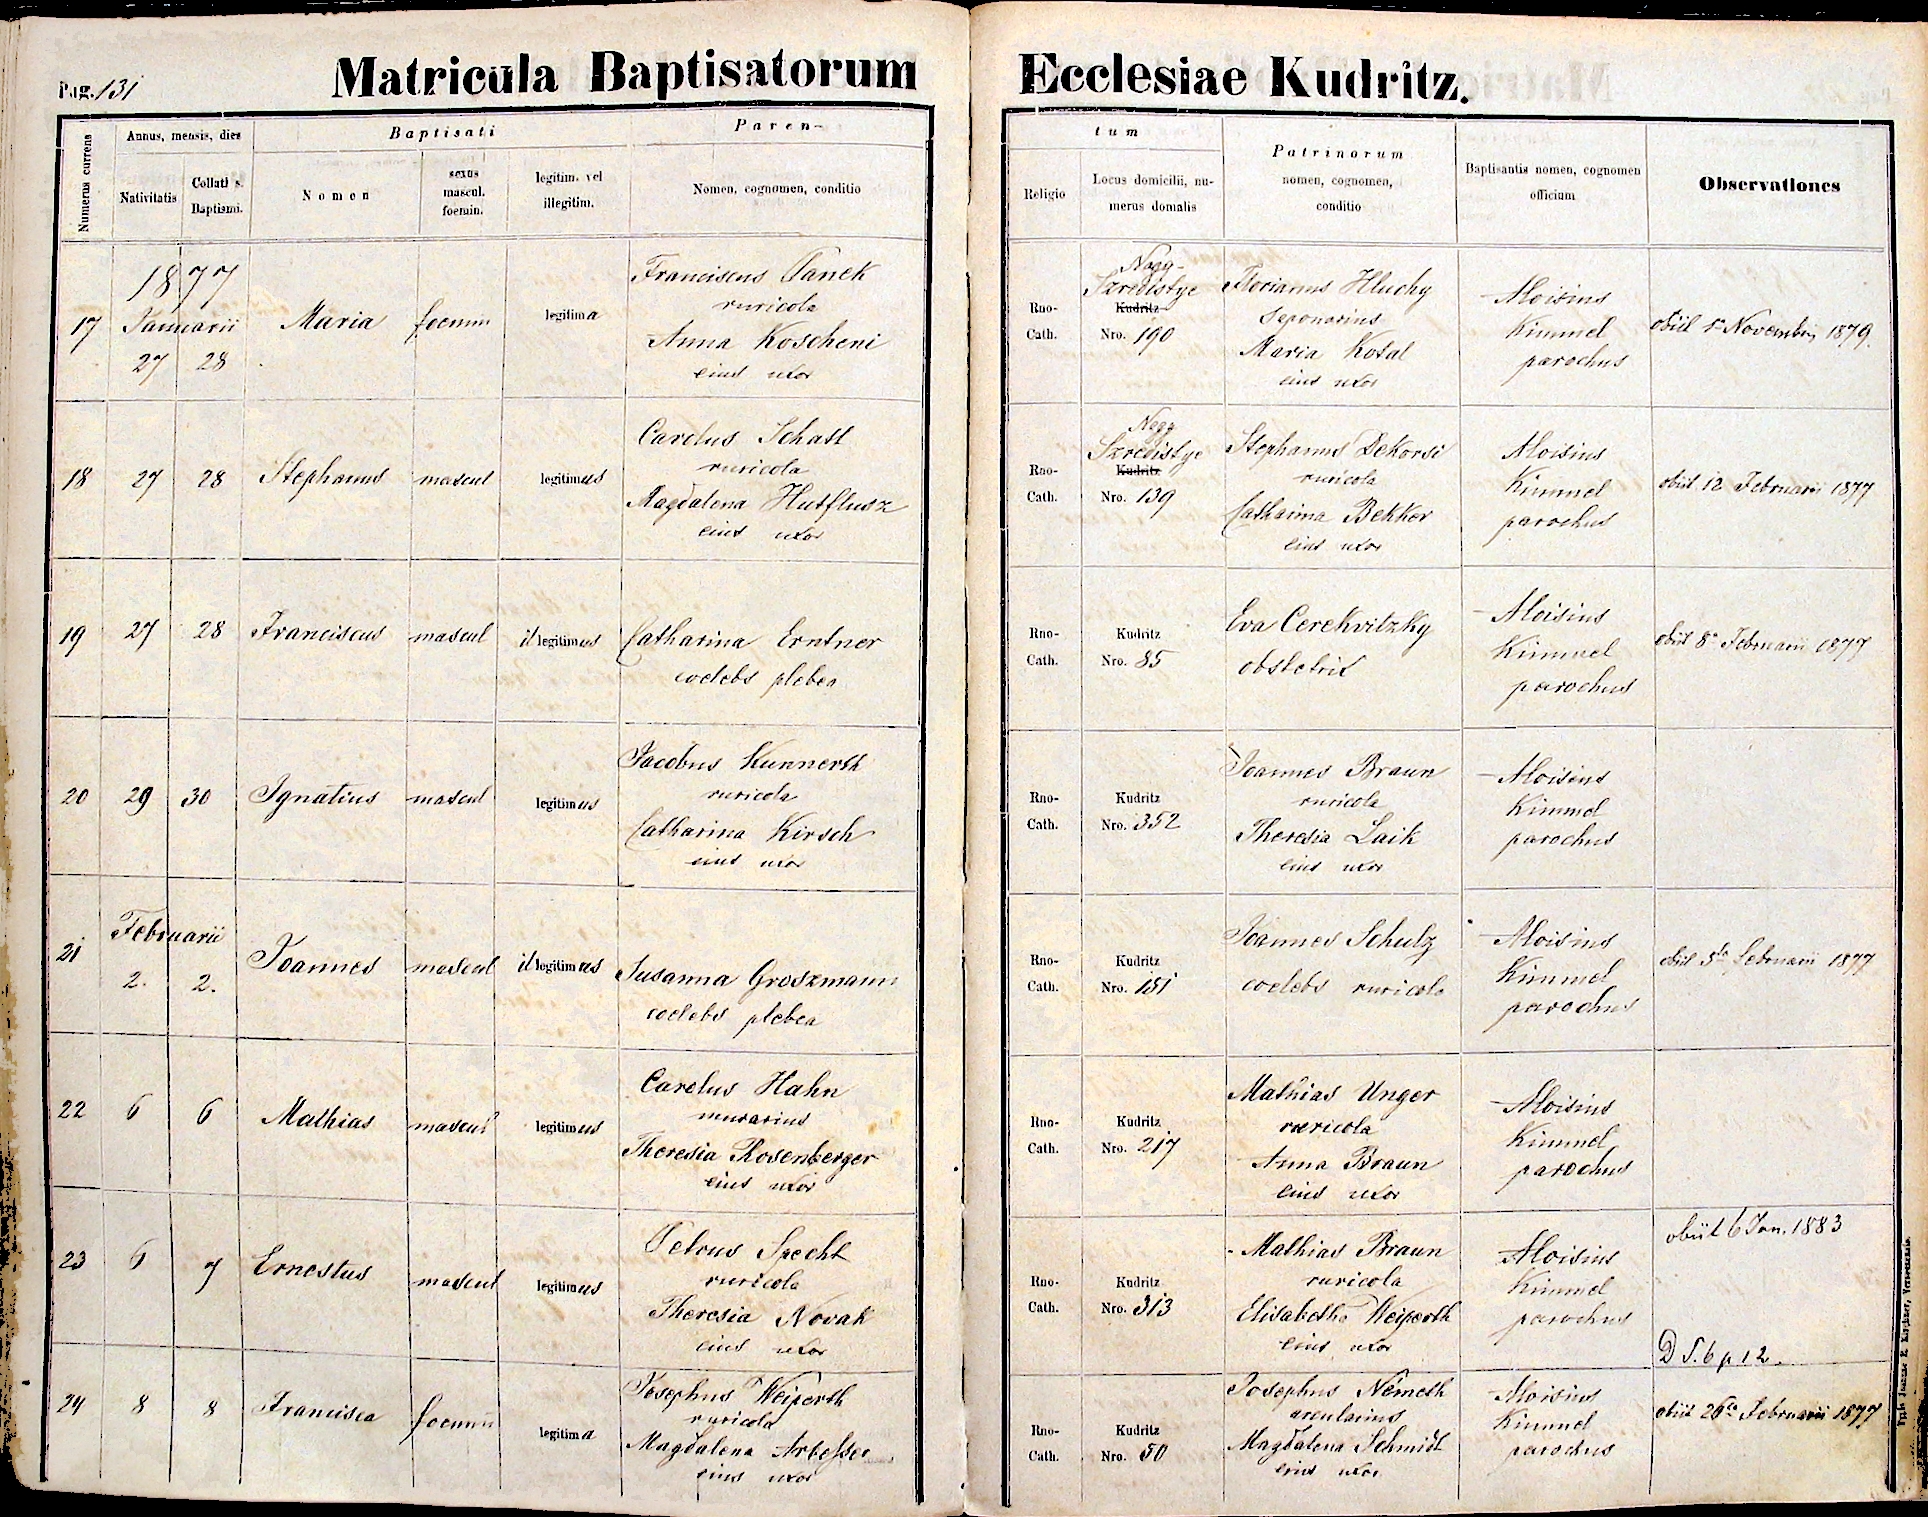 images/church_records/BIRTHS/1870-1879B/1876/131